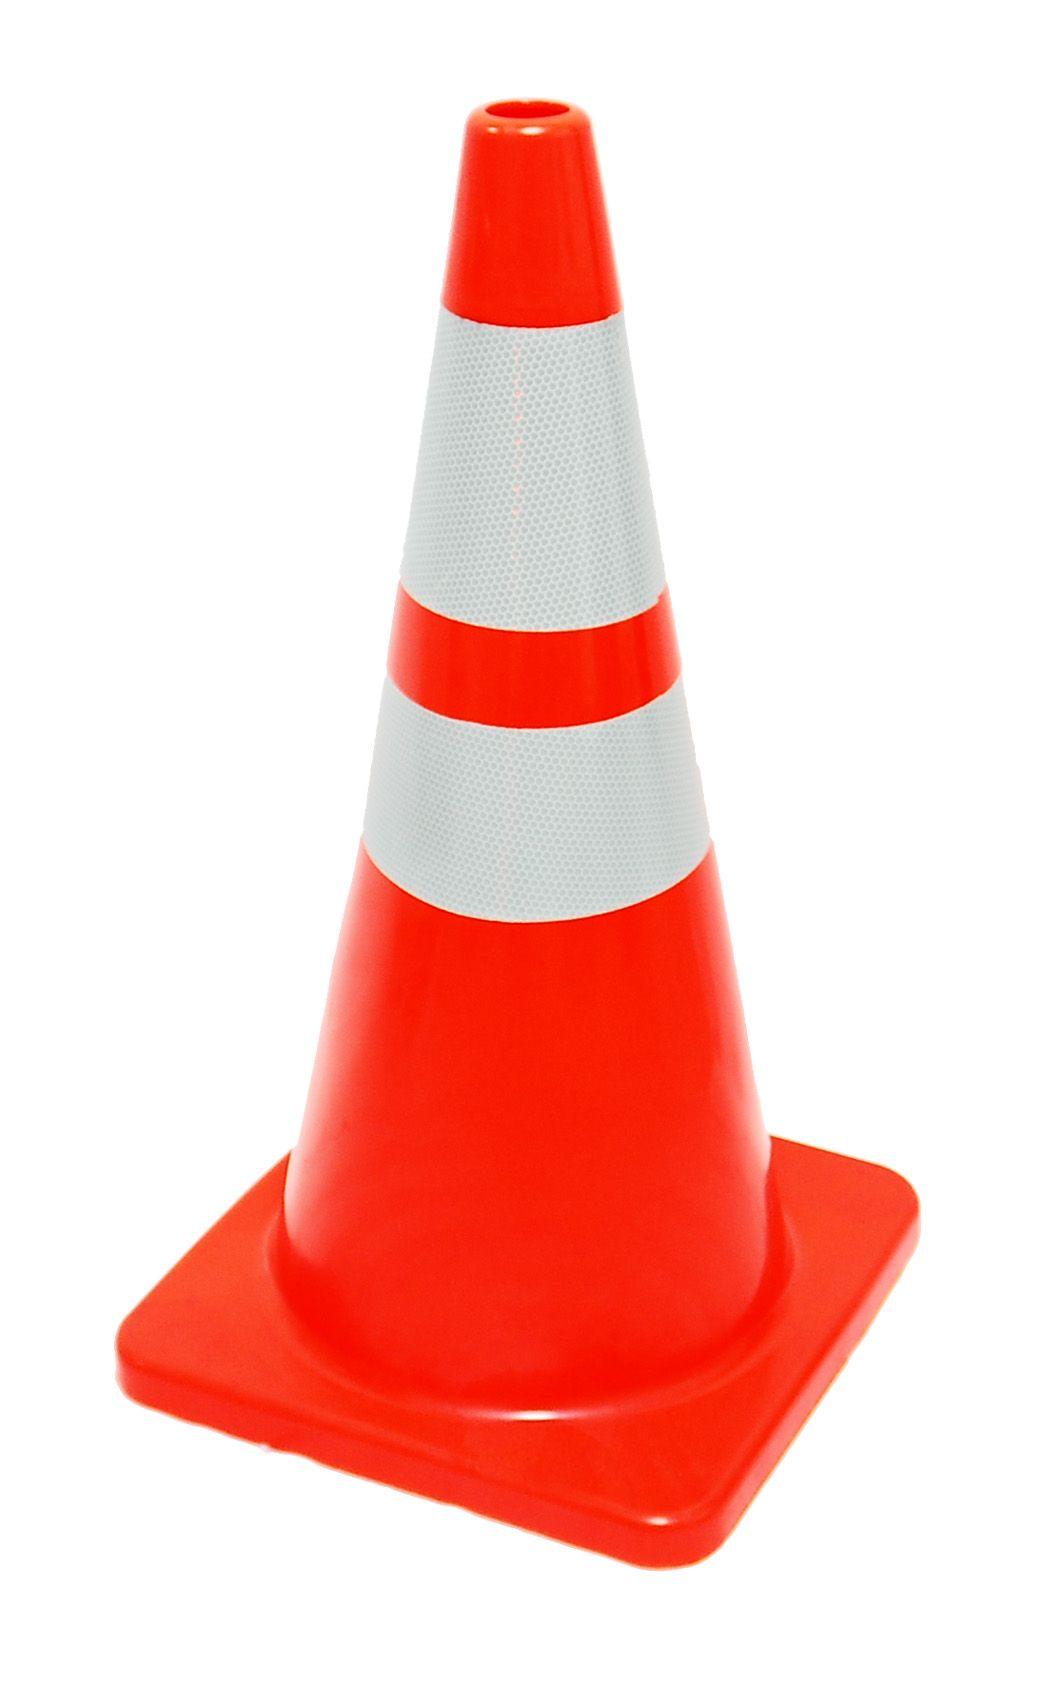 Construction Cone Logo - Pin by Alex Bailey on Symbol Logo | Pinterest | Safety, Construction ...